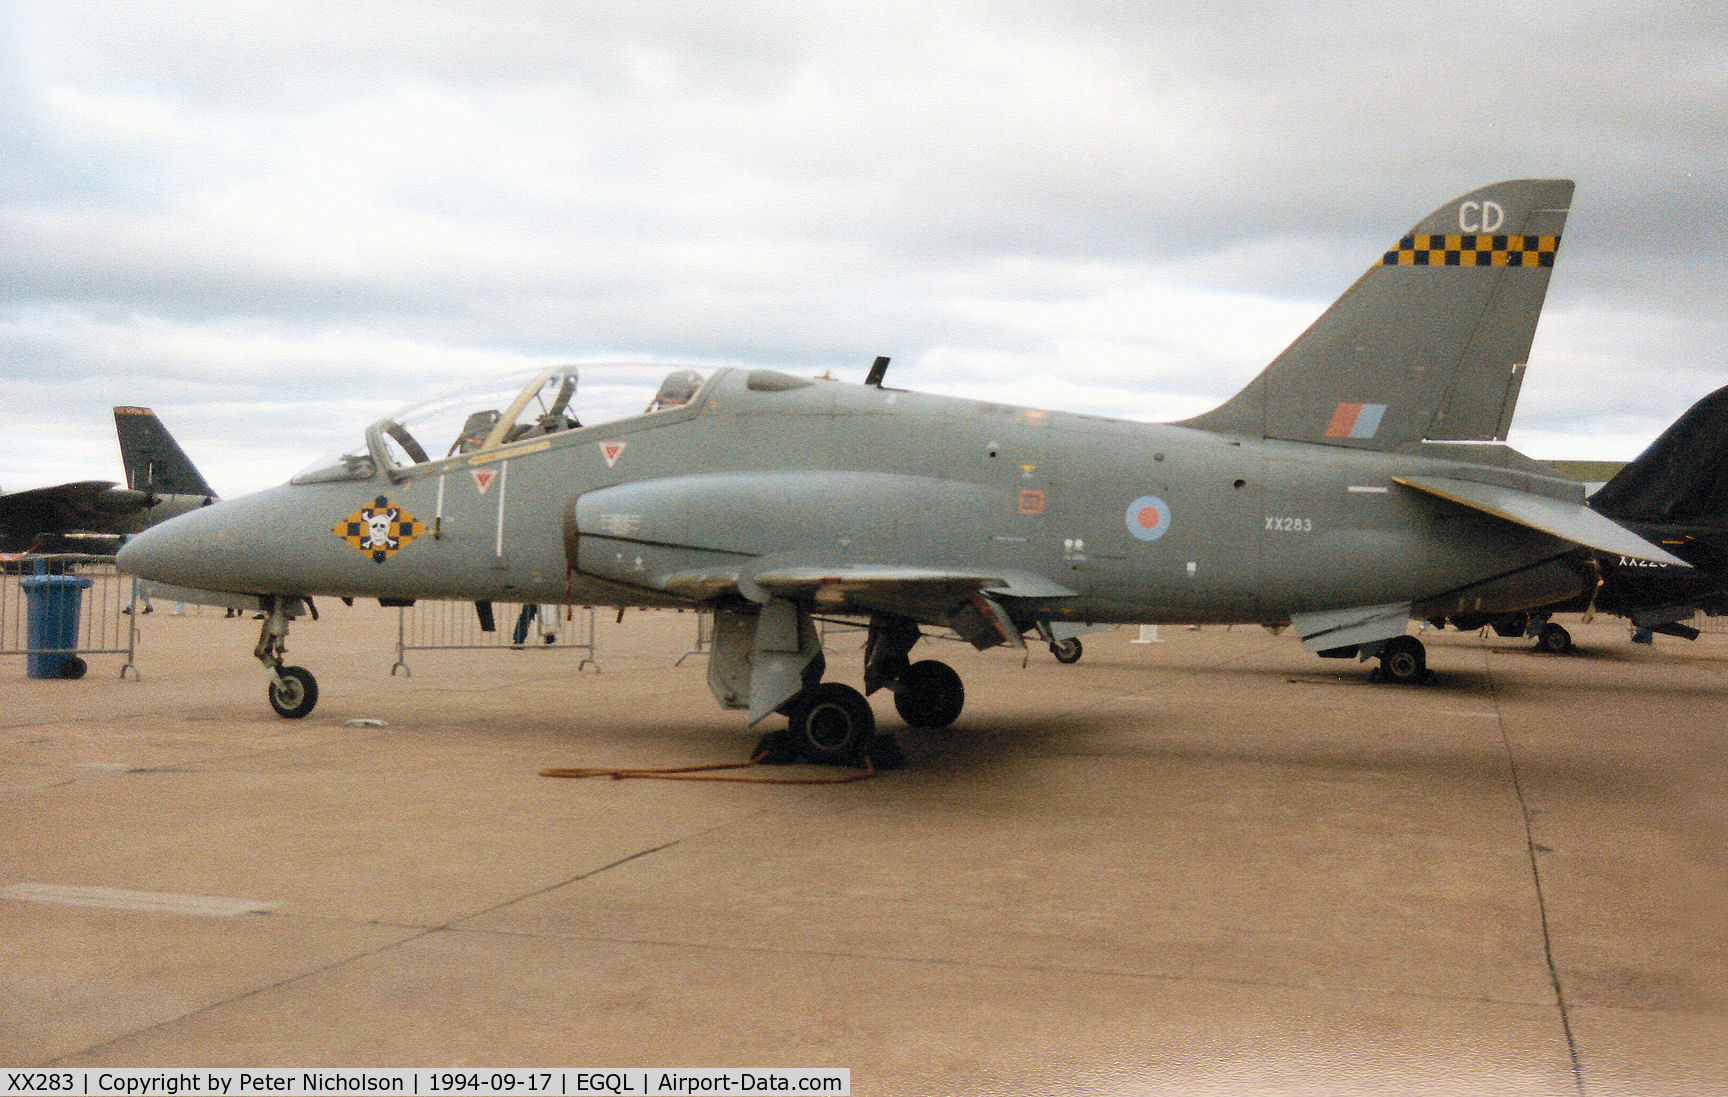 XX283, 1979 Hawker Siddeley Hawk T.1 C/N 109/312108, Hawk T.1A of 100 Squadron at RAF Leeming on display at the 1994 RAF Leuchars Airshow.